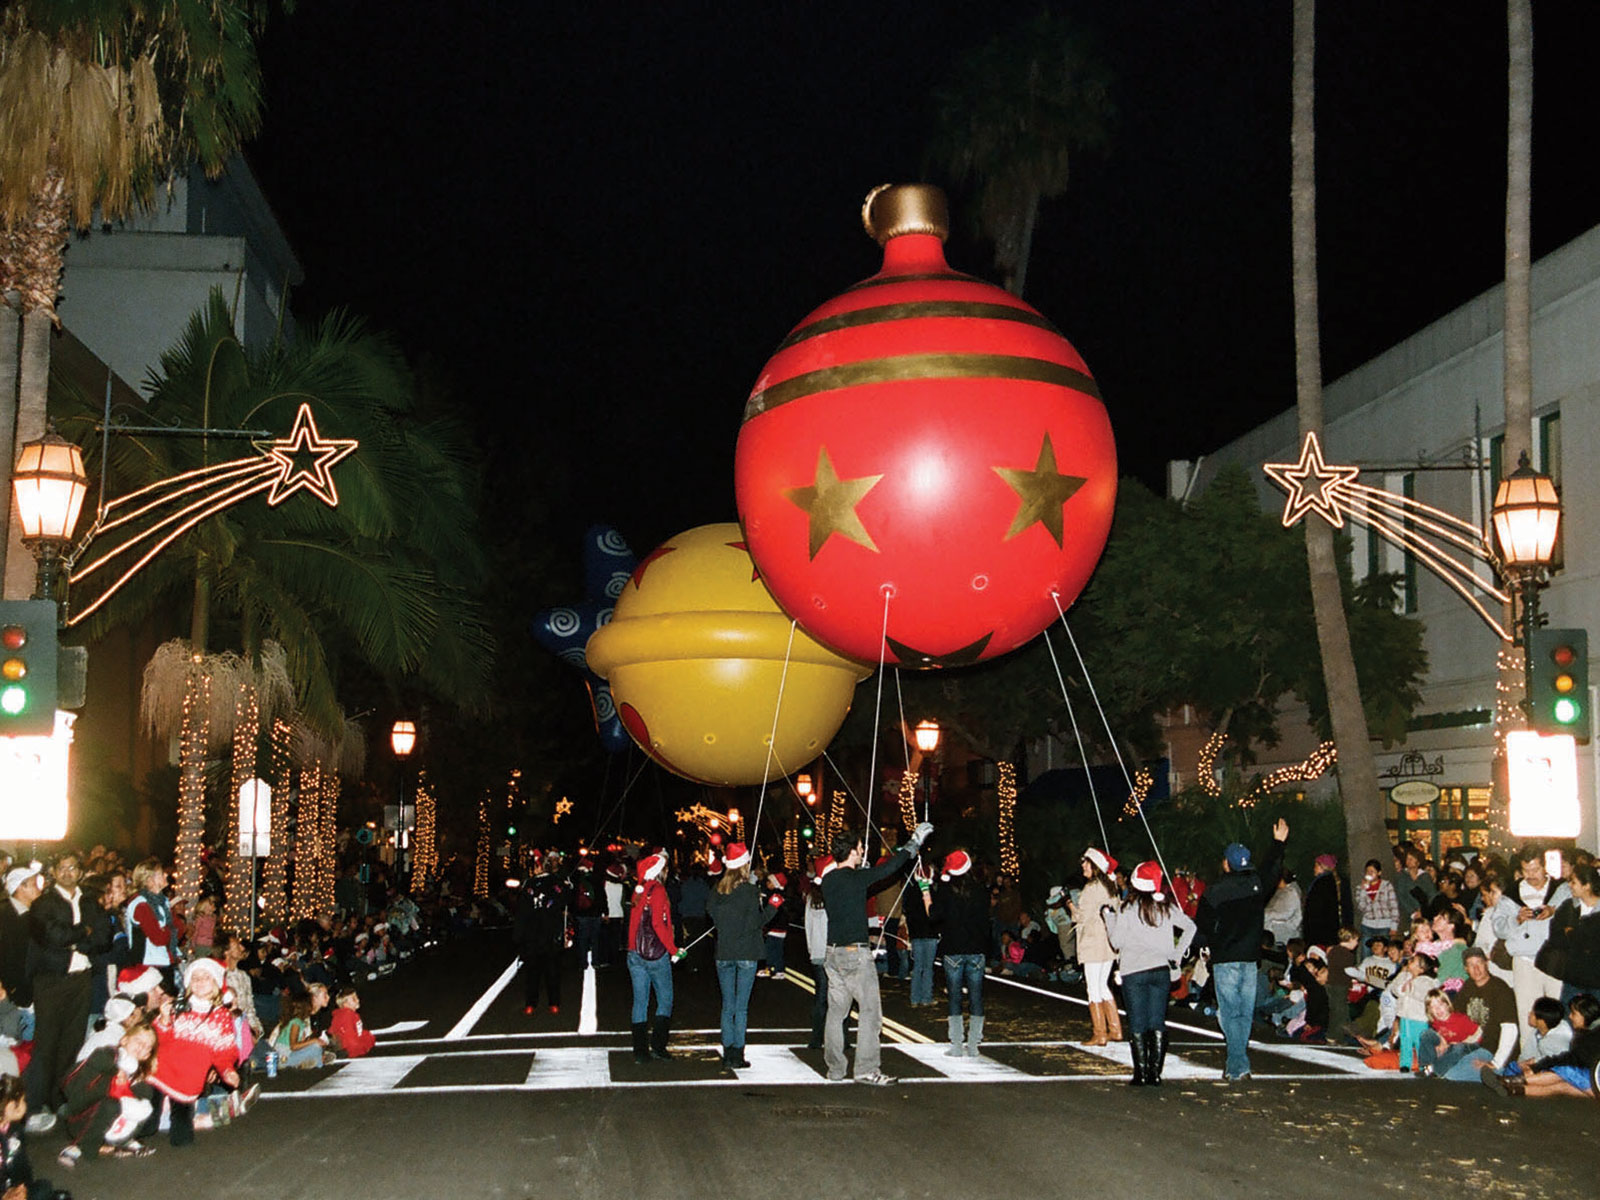 Helium Parade Balloons -14' Christmas Ornaments